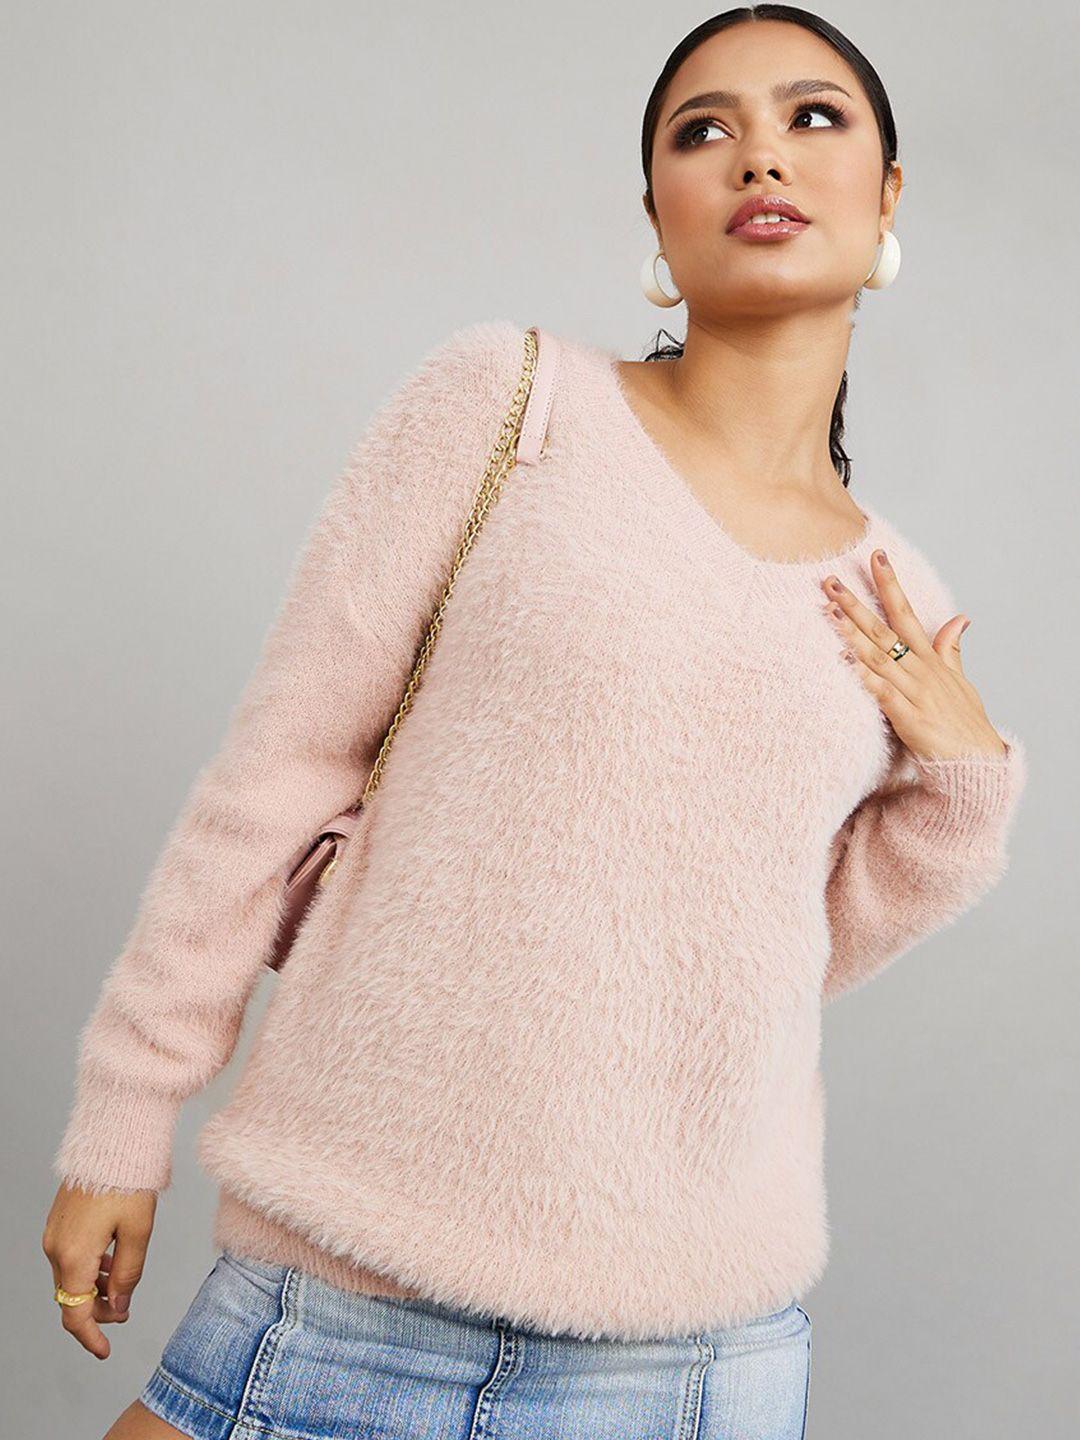 styli-women-pink-pullover